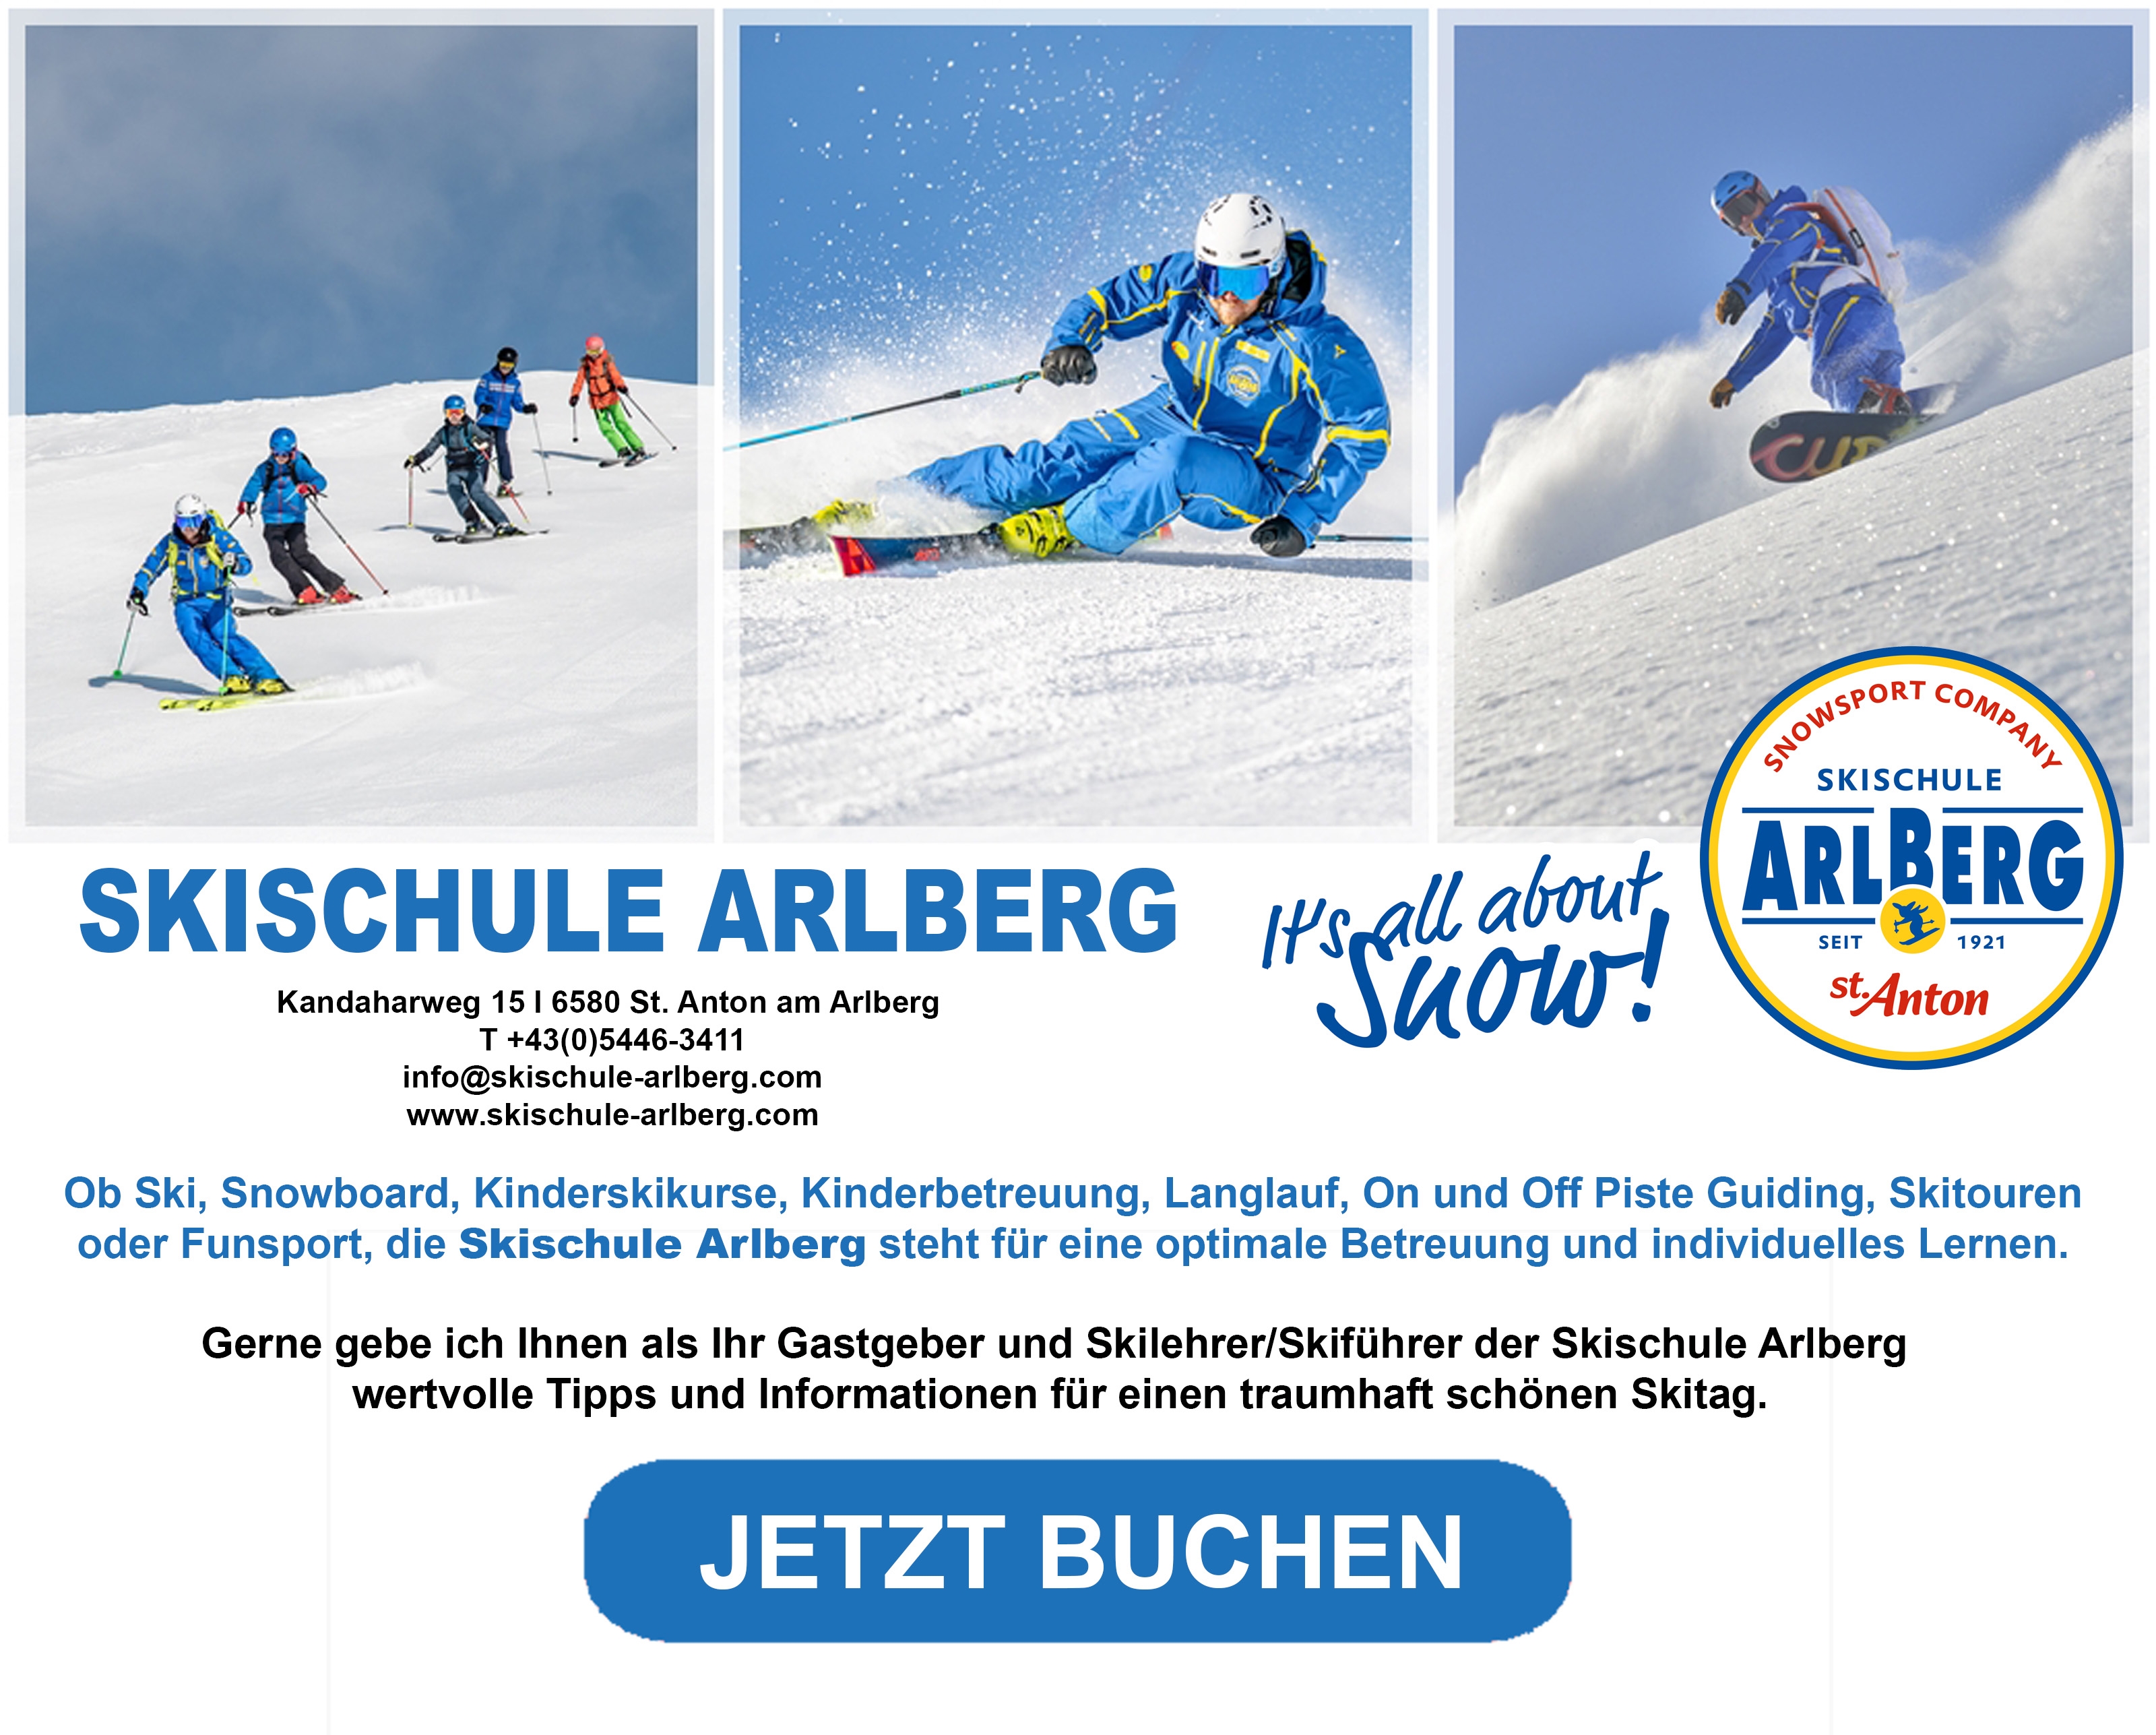 ski school "Arlberg"